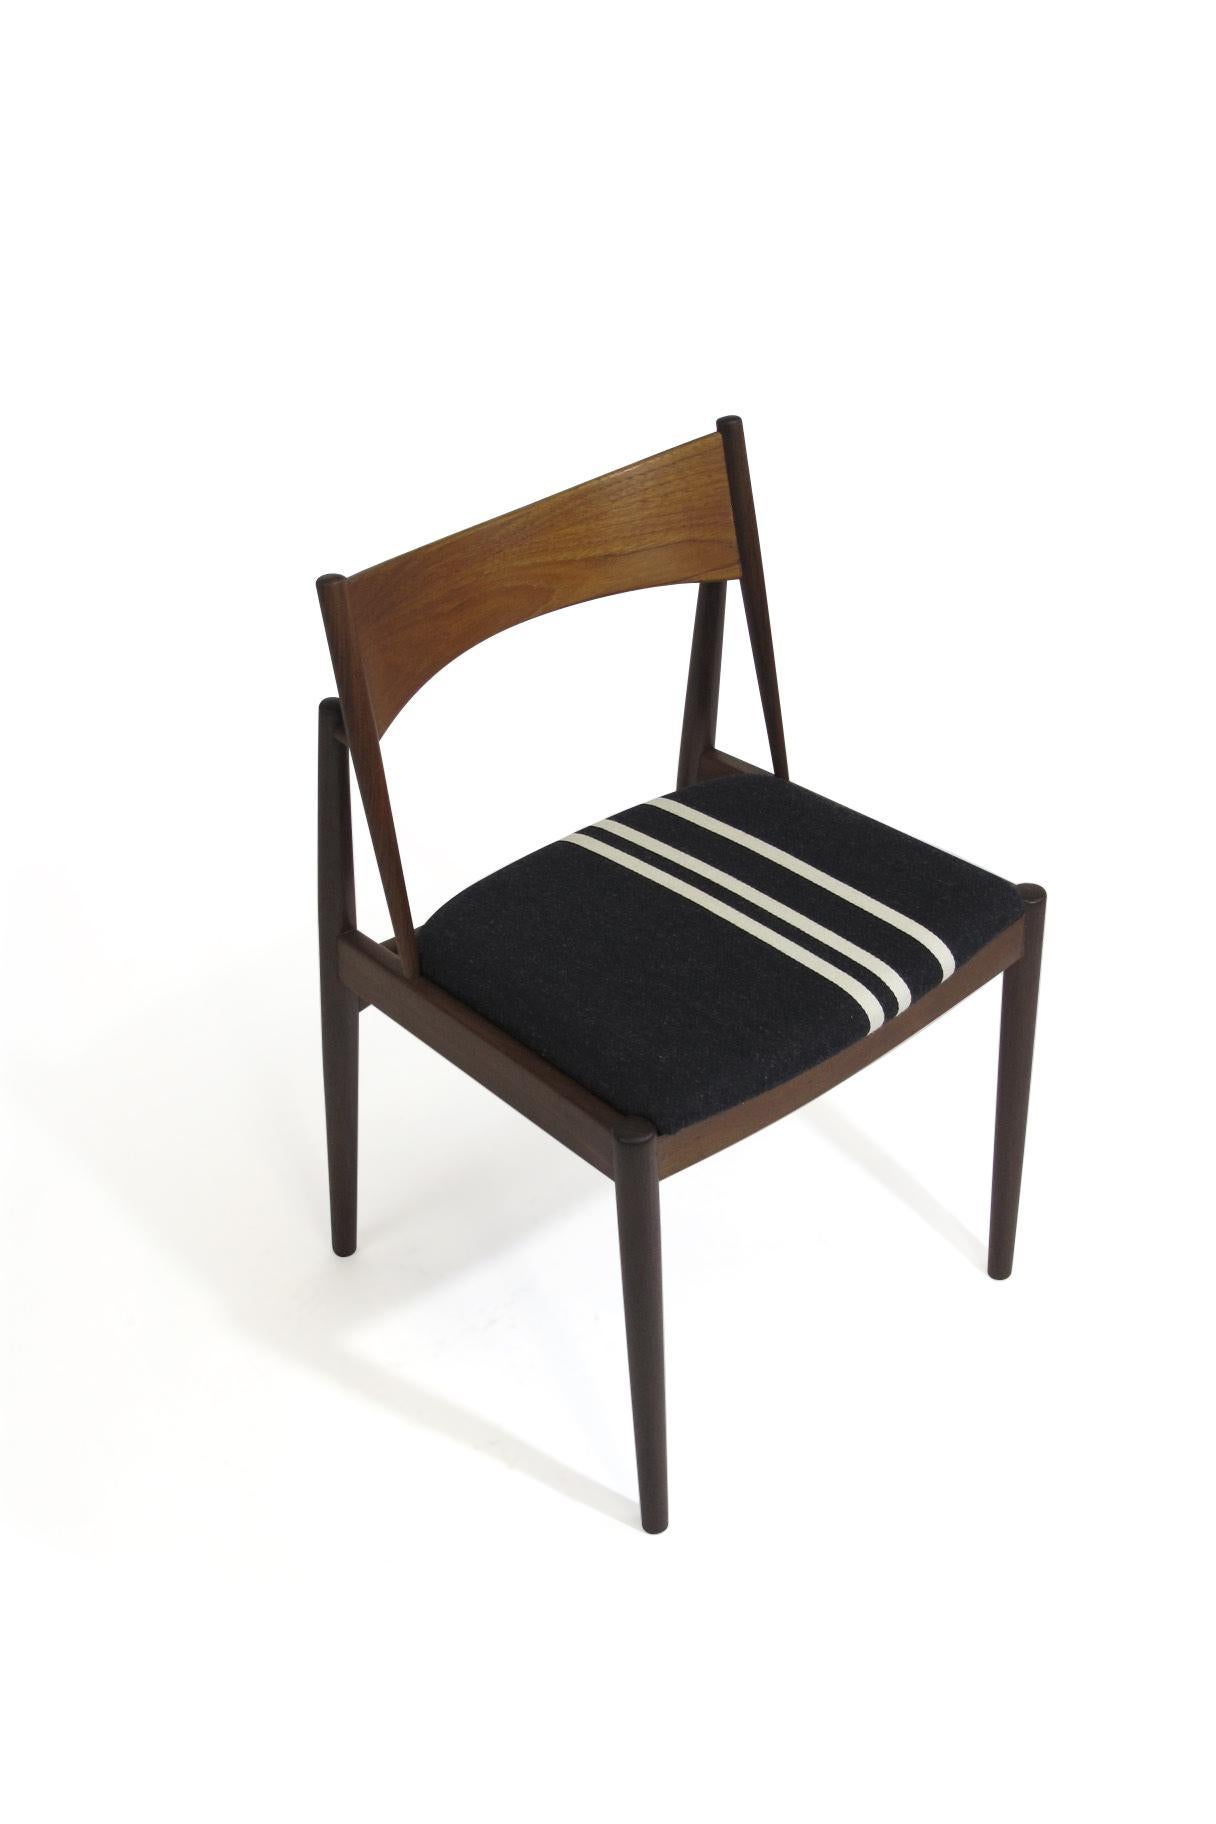 Danish H.W Klein Teak Dining Chairs, Set of Four 1